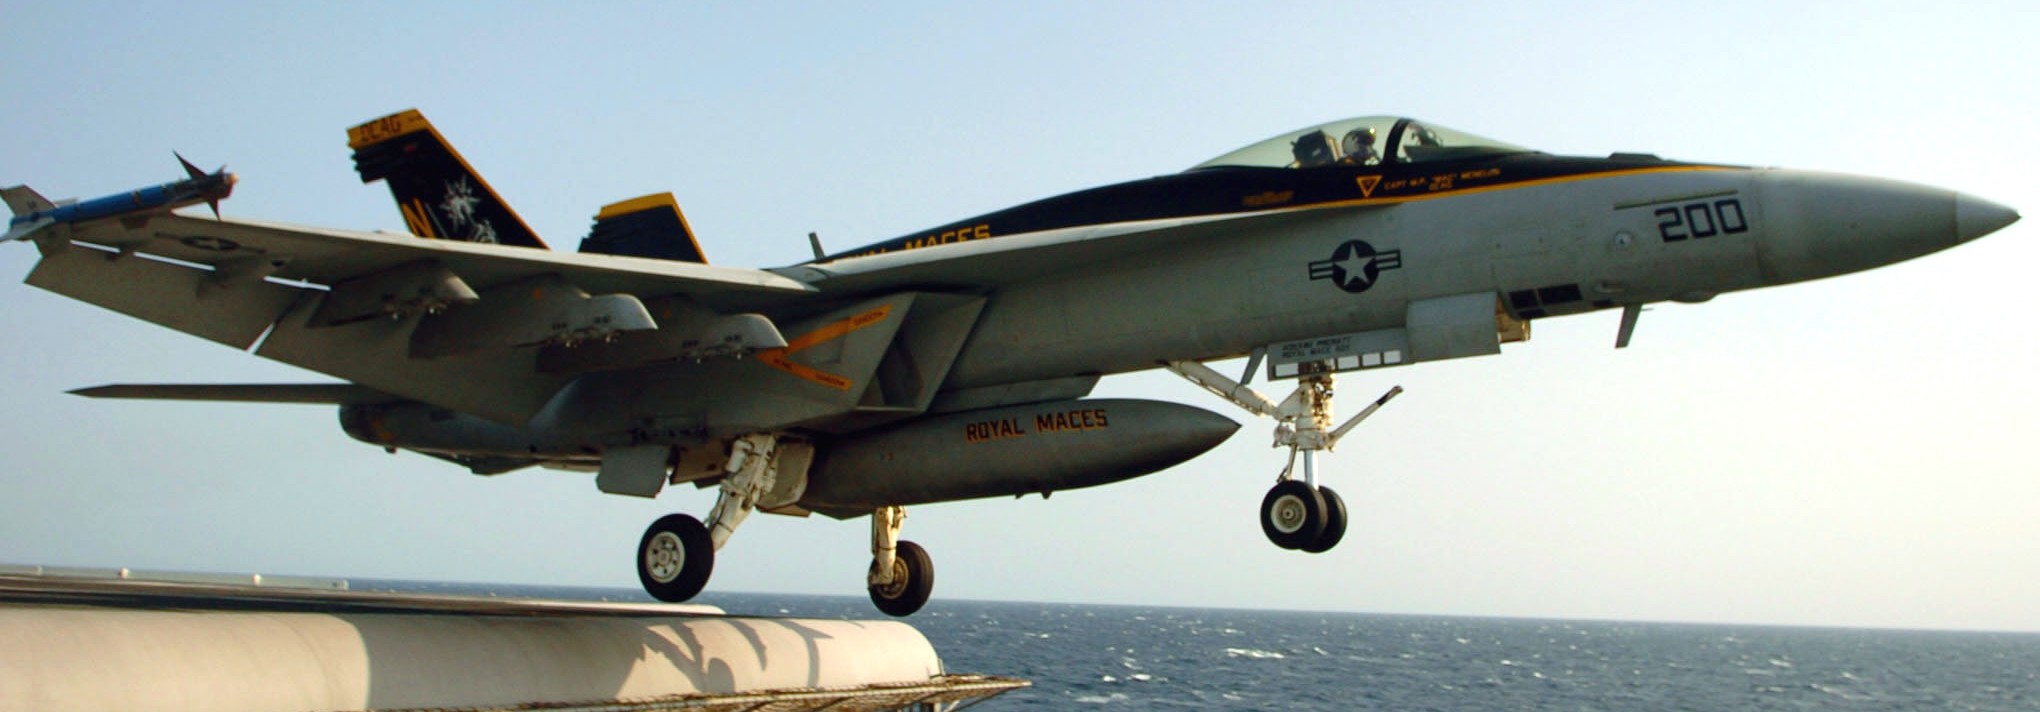 vfa-27 royal maces strike fighter squadron f/a-18e super hornet cv-63 uss kitty hawk cvw-5 us navy 16